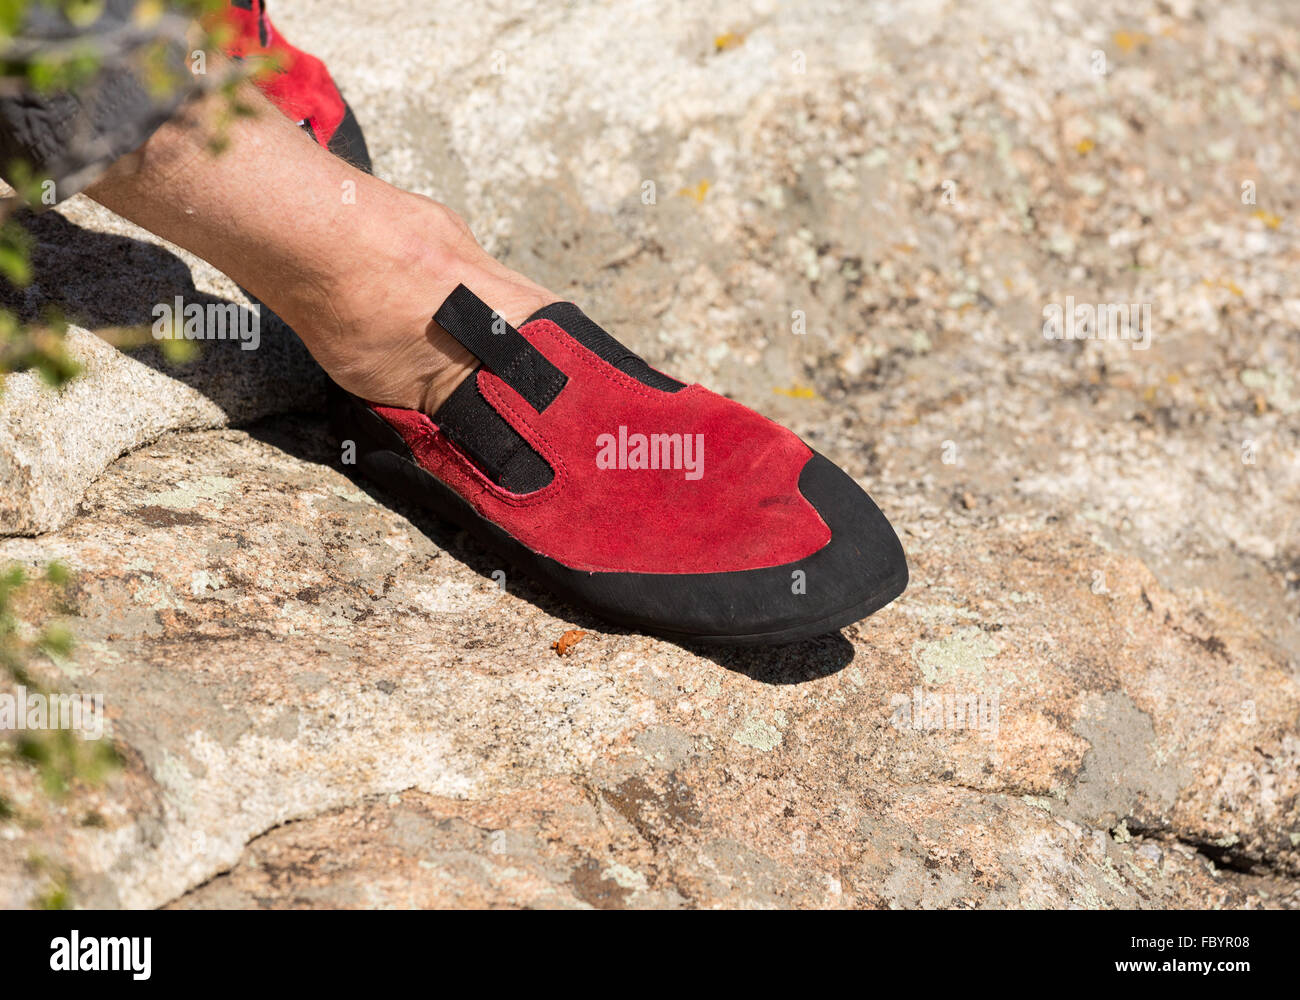 Rote Gummi Schuh auf Felsen klettern hautnah Stockfoto